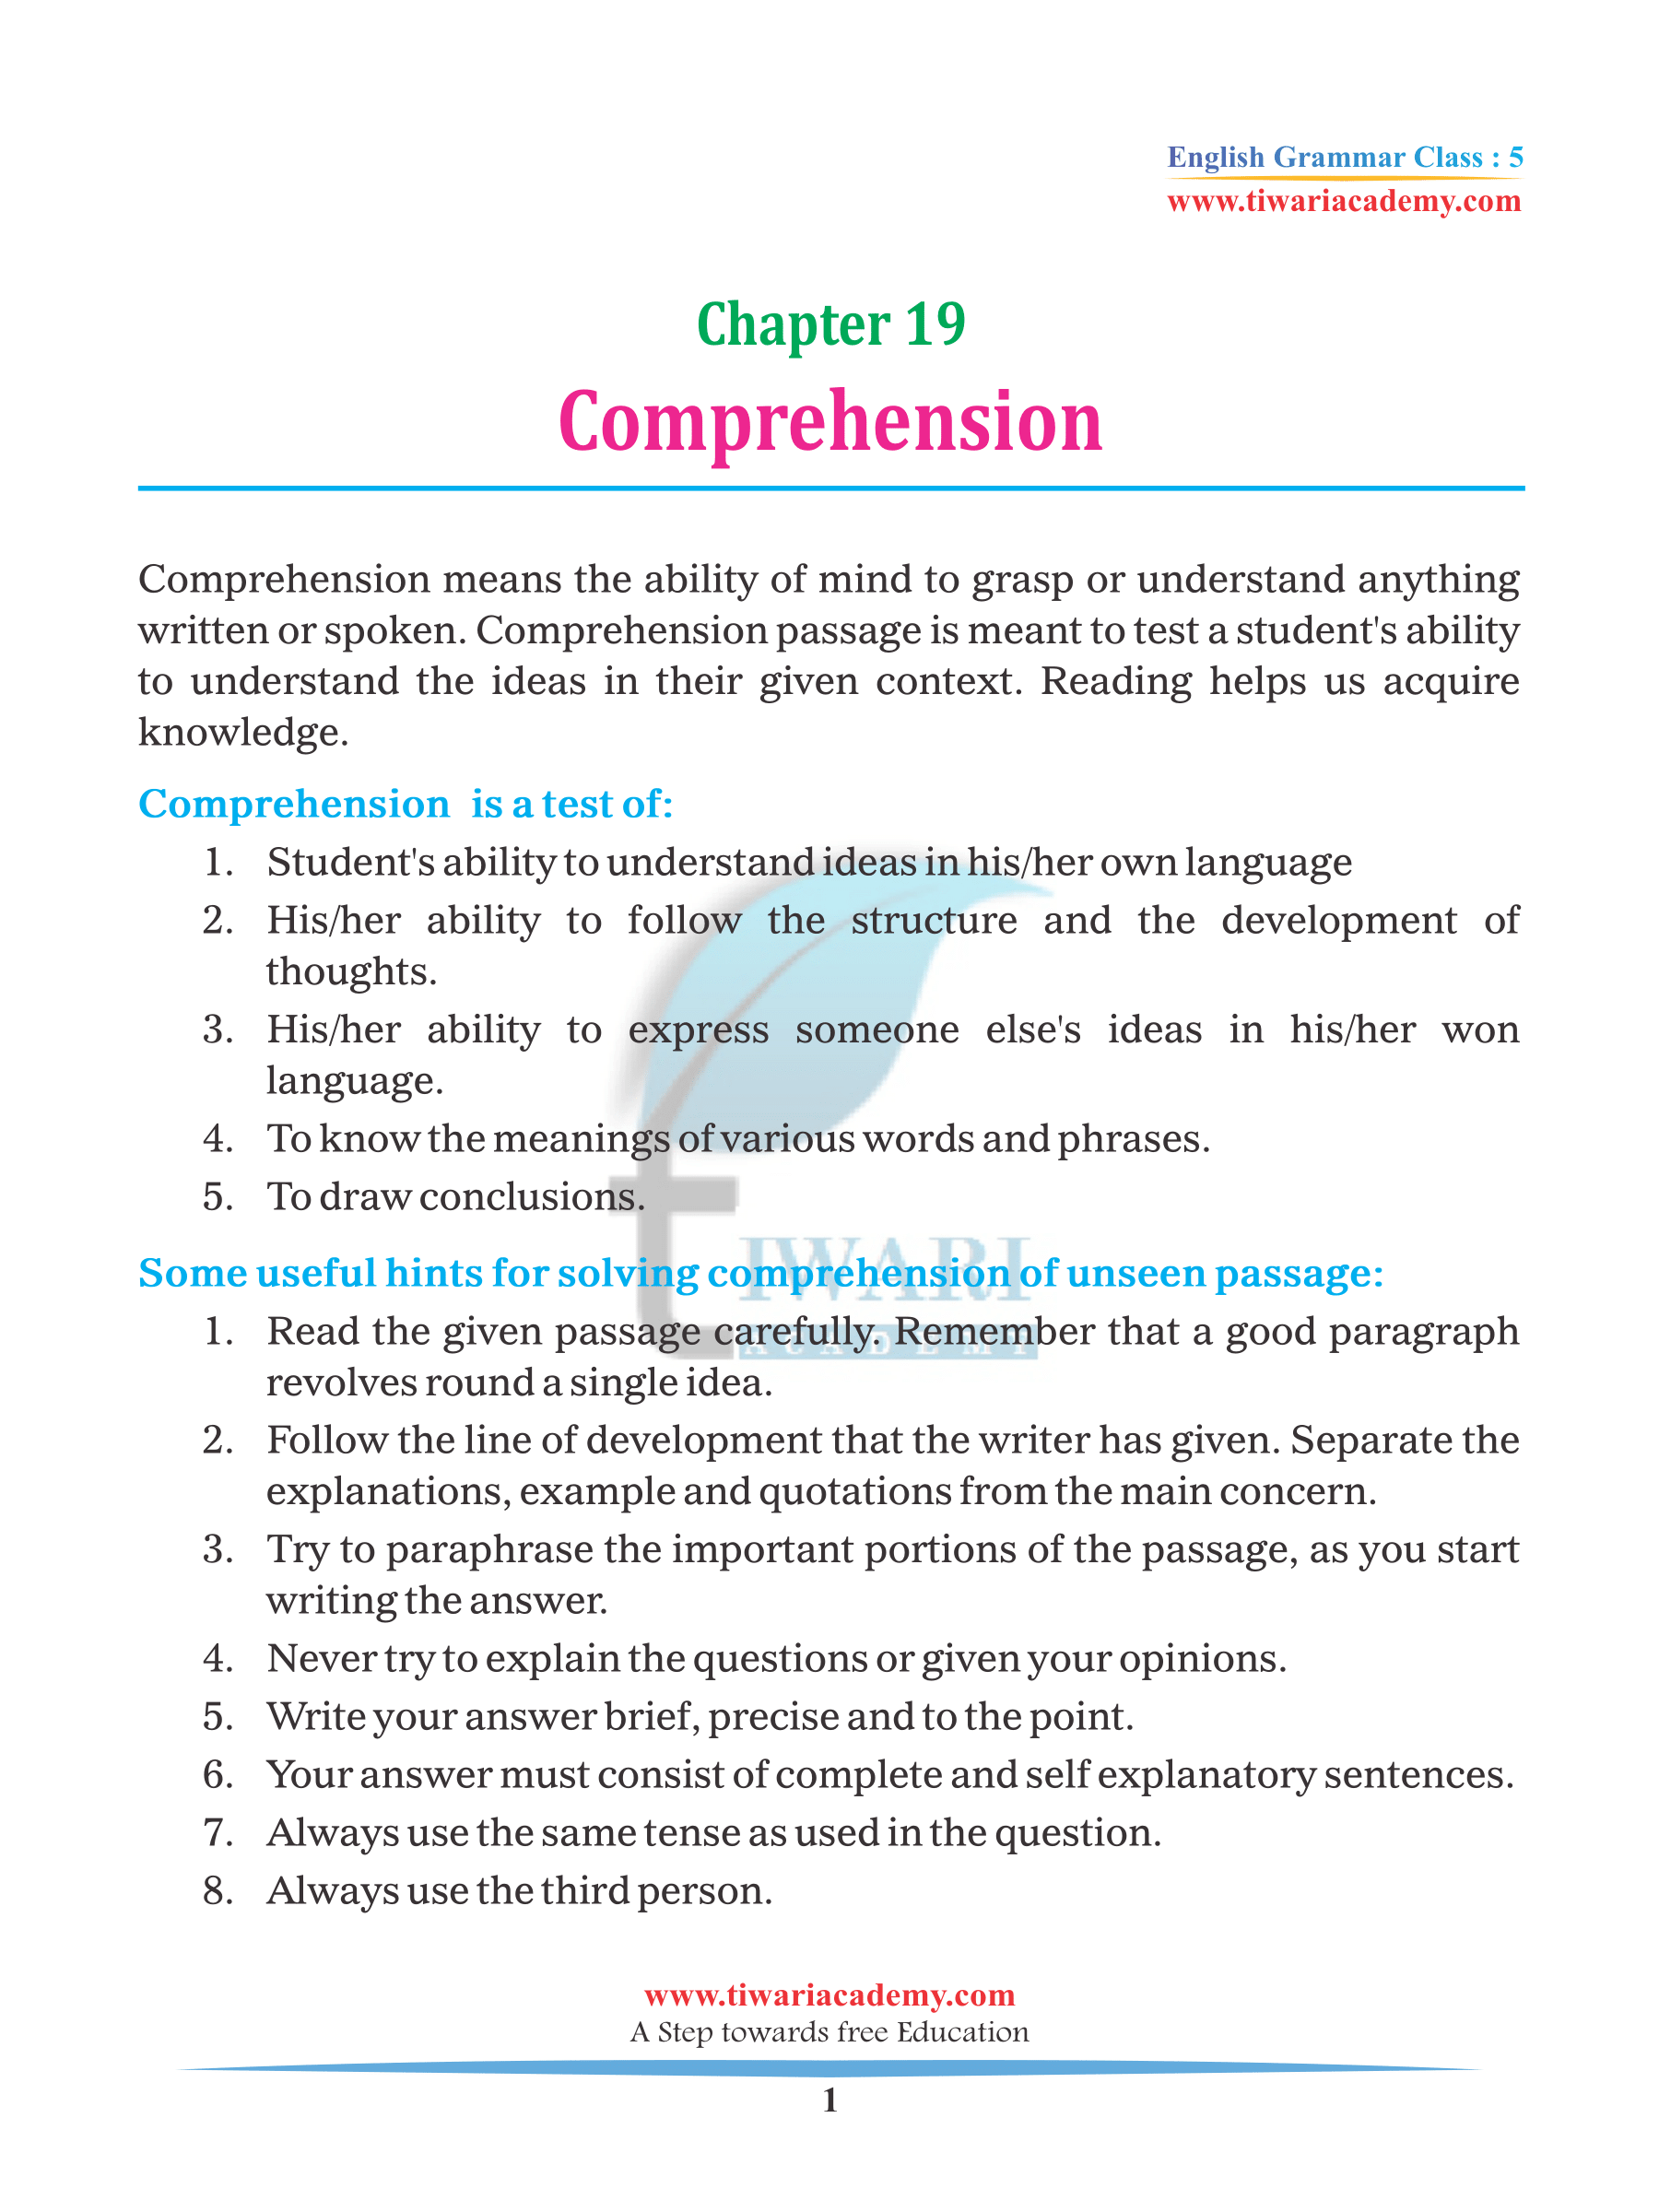 Class 5 English Grammar Chapter 19 Comprehension